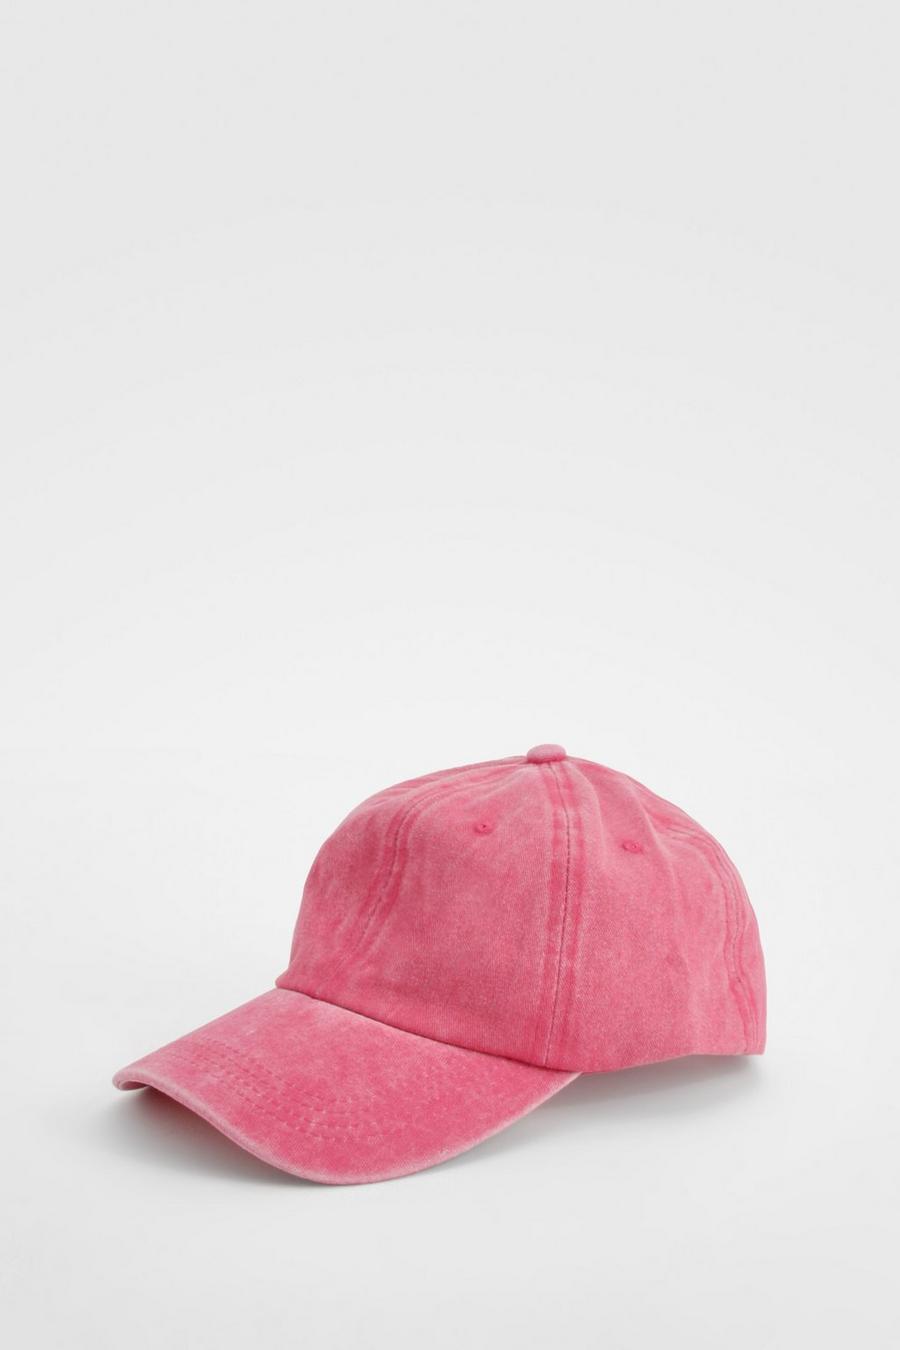 Pinke Baseball-Kappe, Pink